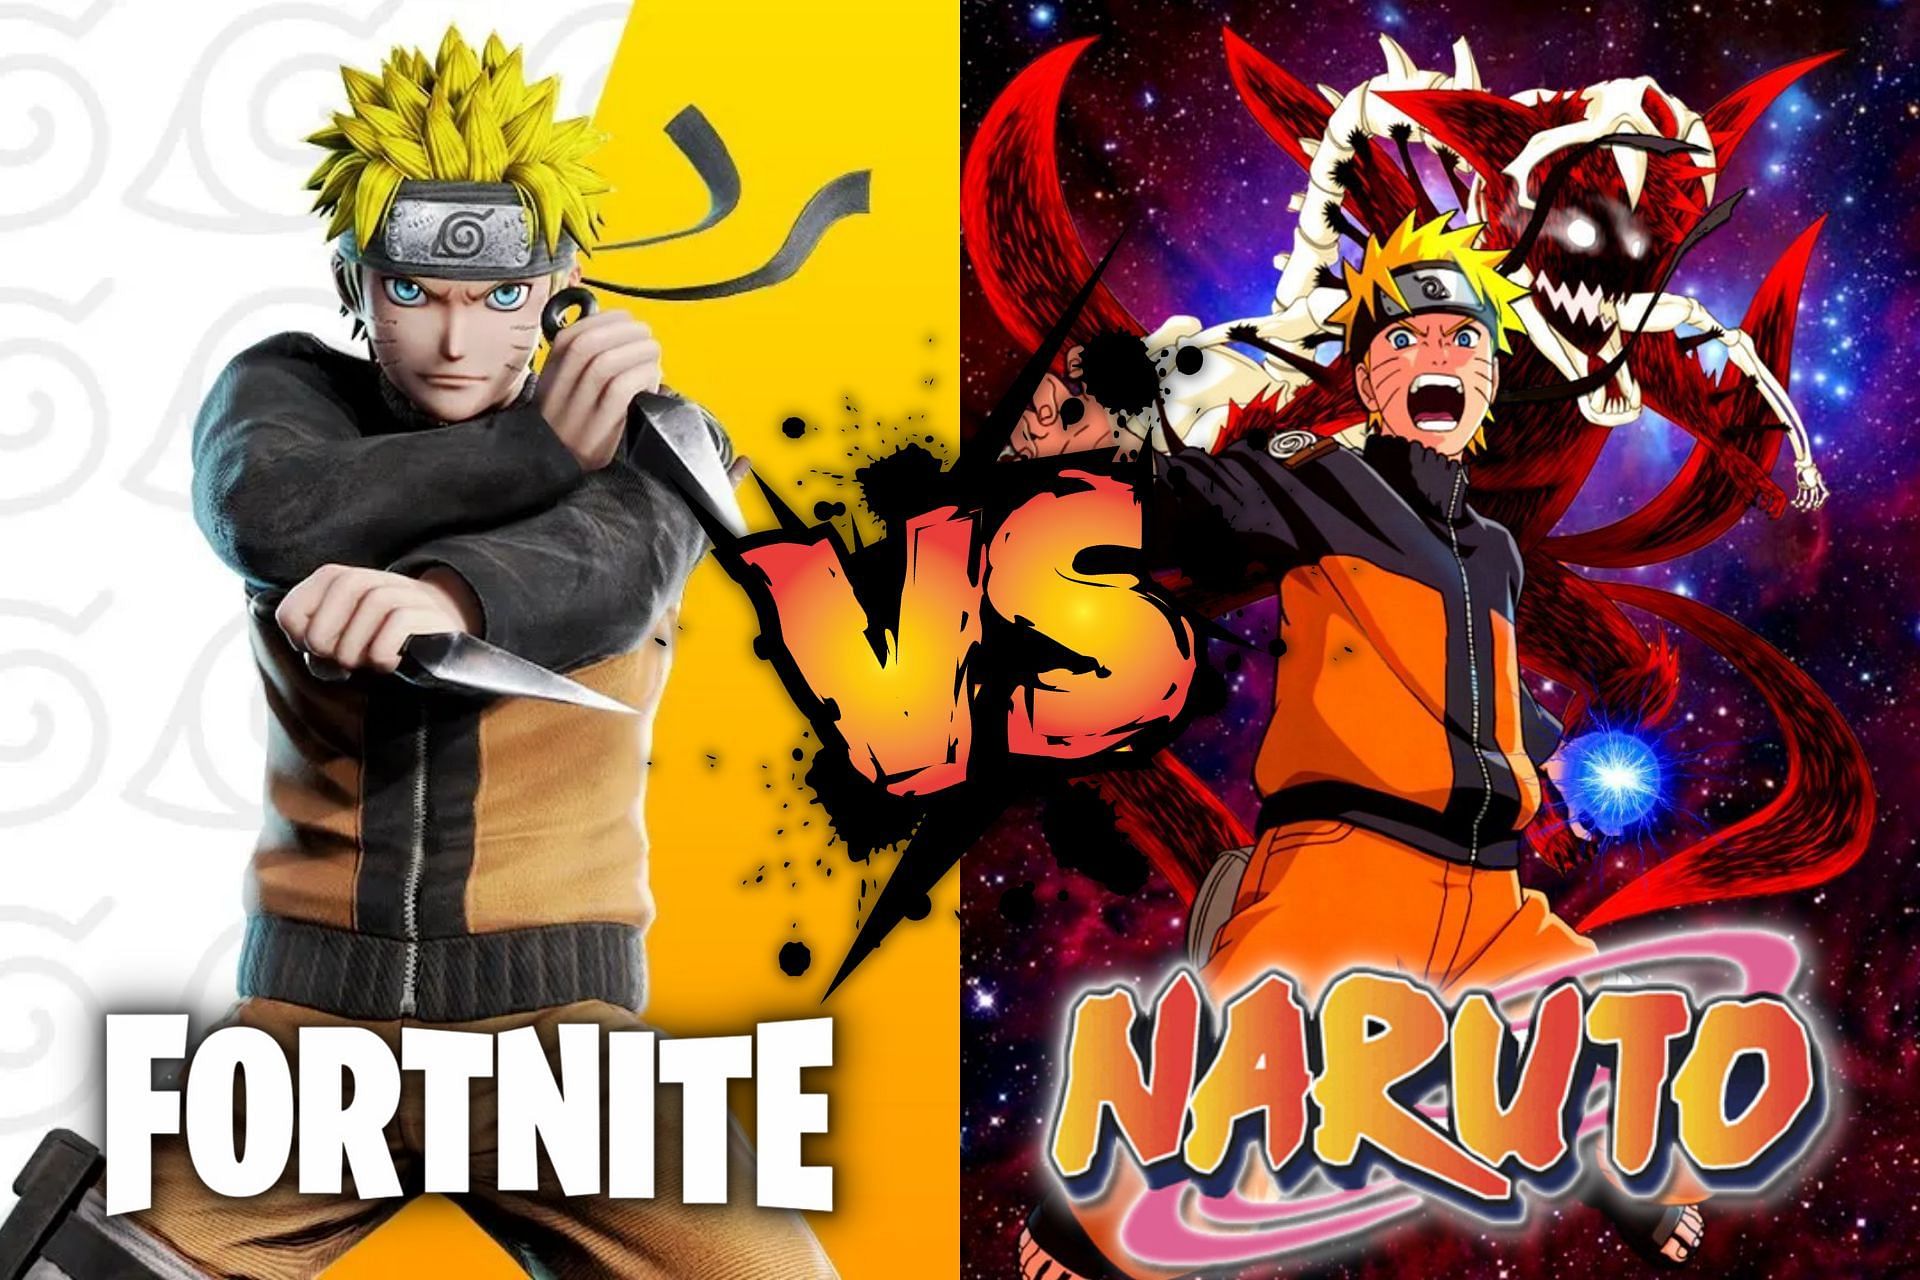 Naruto: Fortnite fans vs. Anime Fans (Image via Sportskeeda)